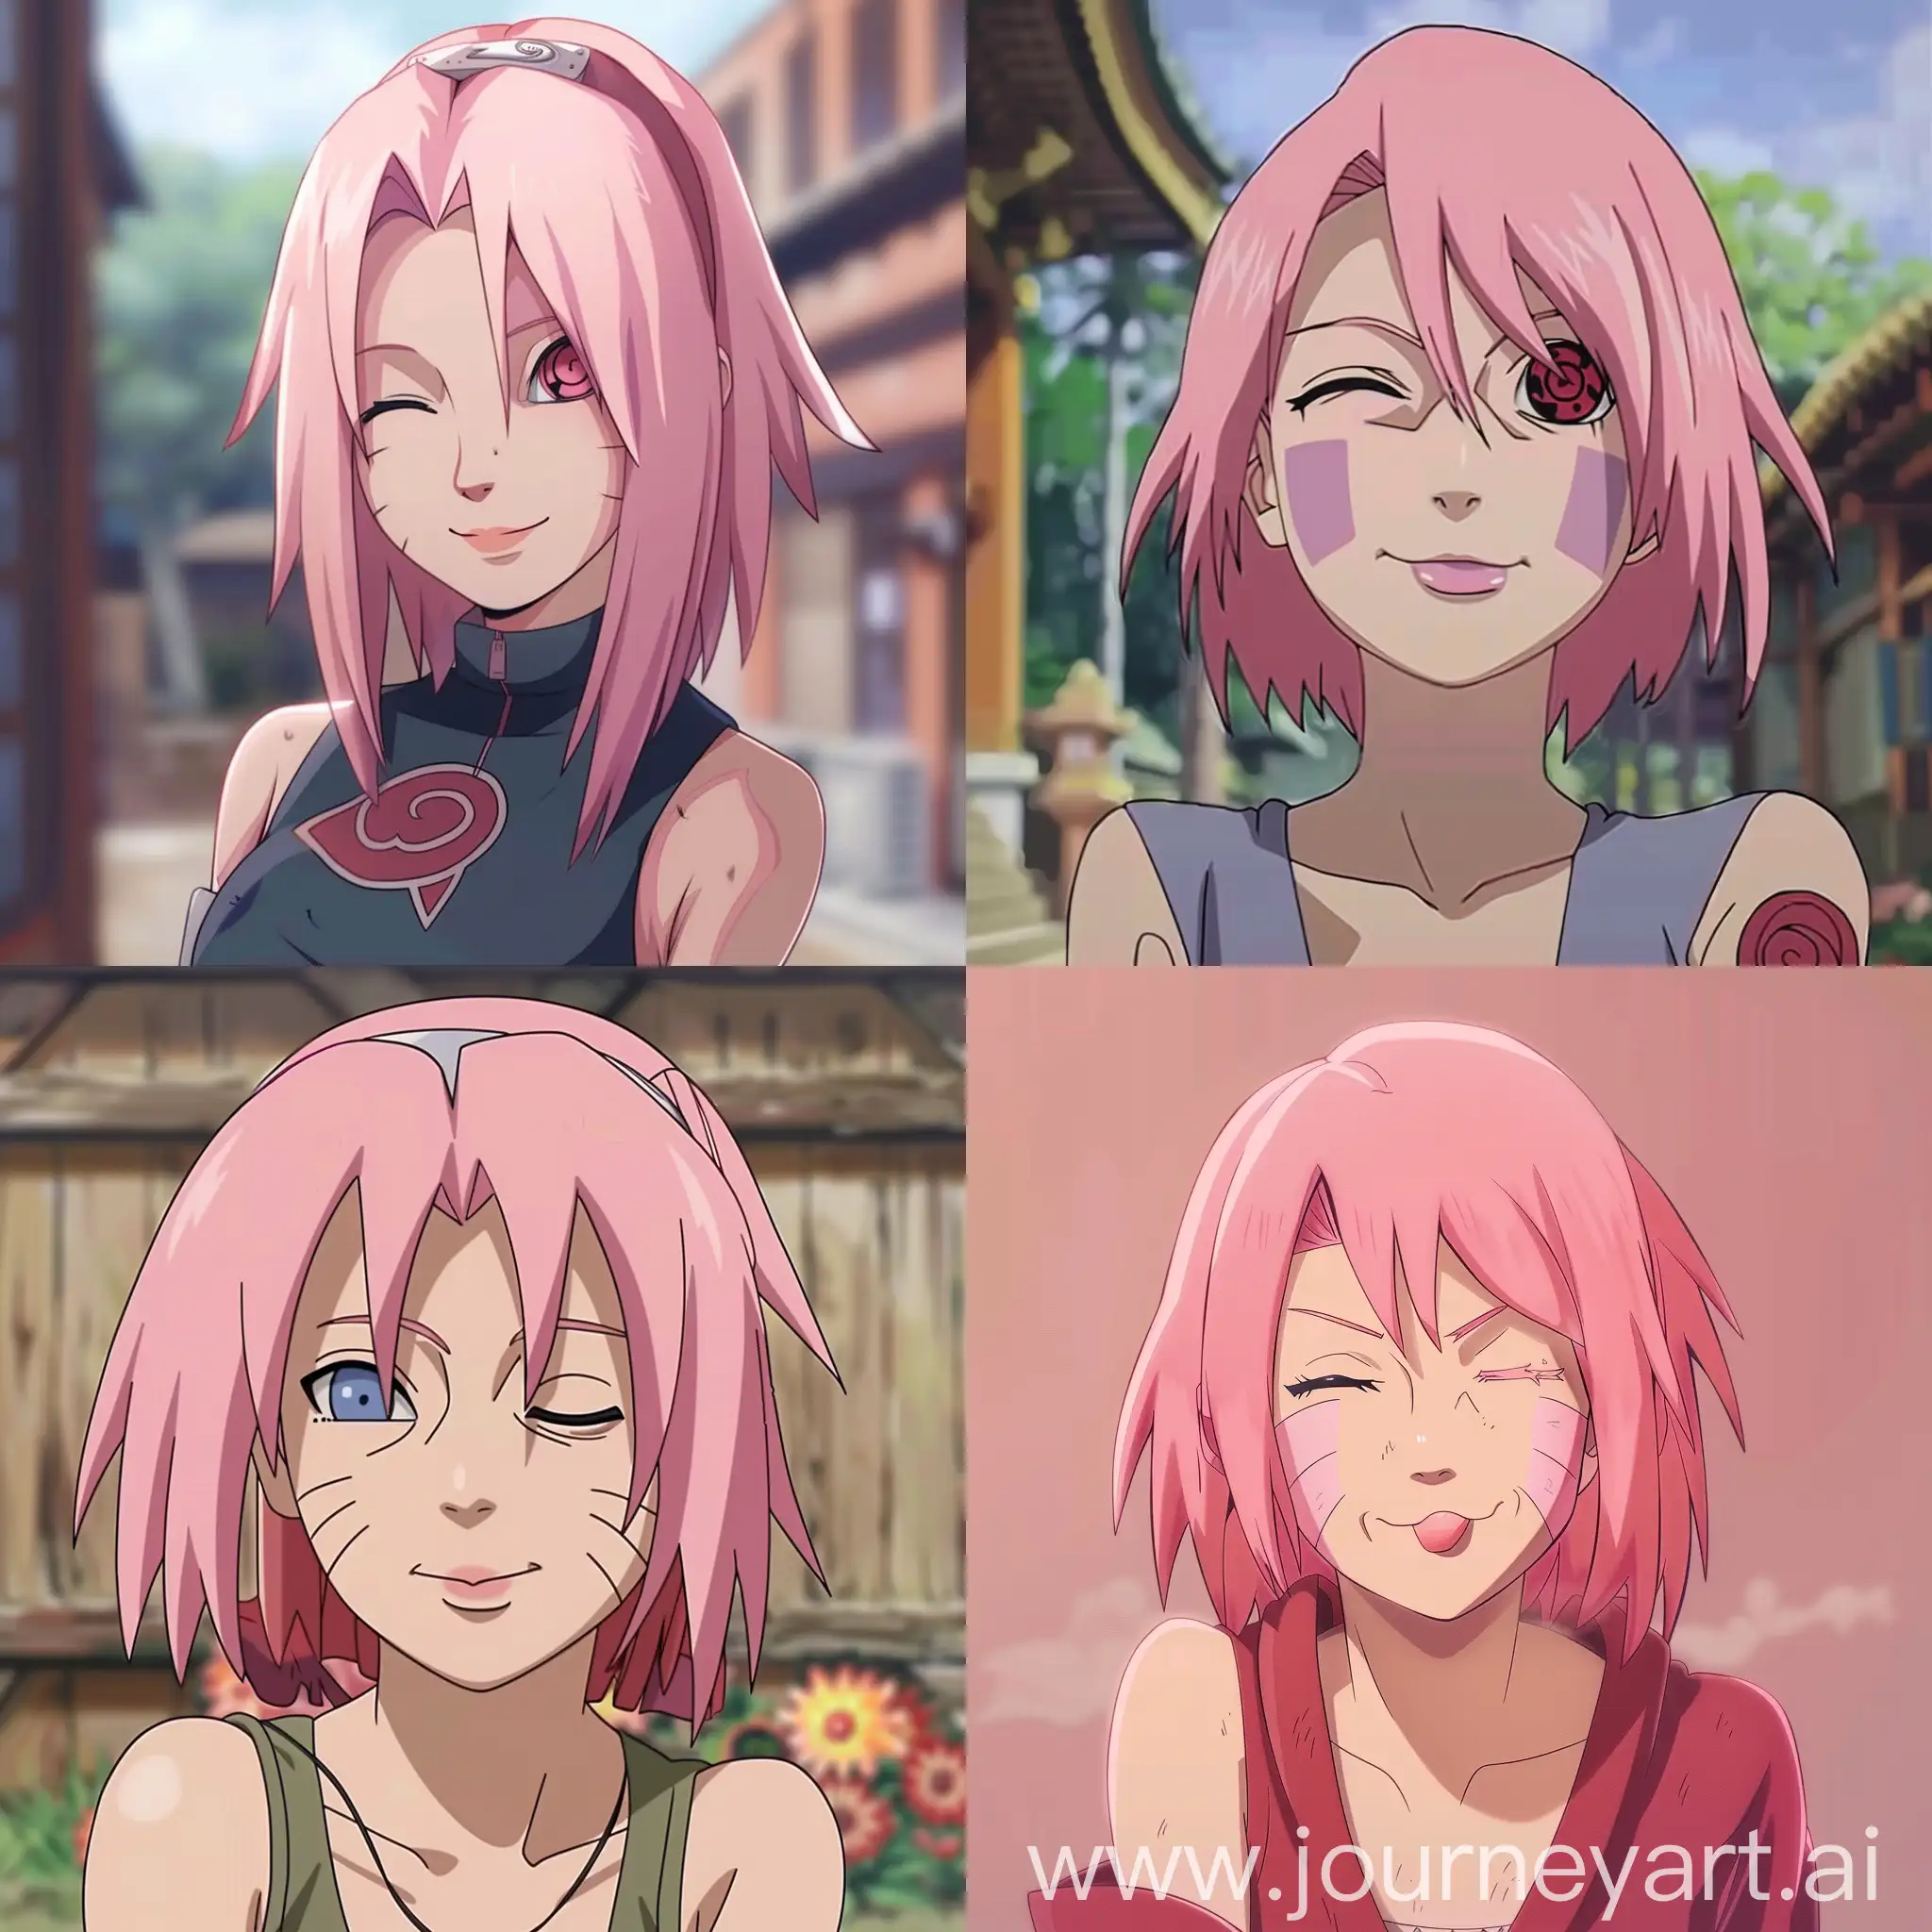 Cute Sakura Haruno winking from Naruto anime 